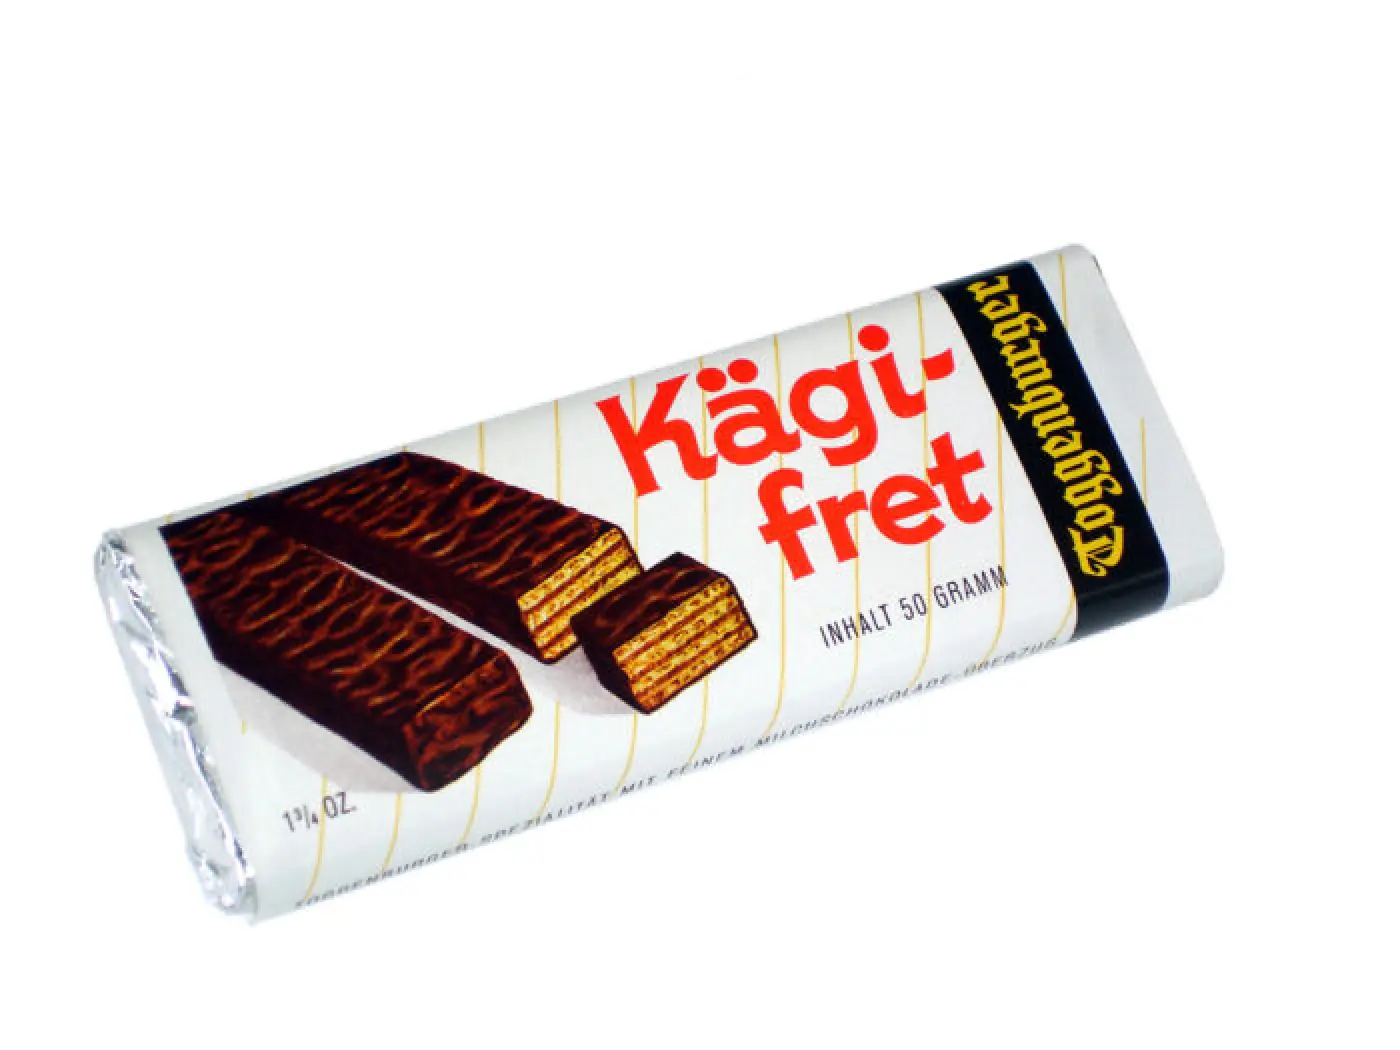 The Kägi is born